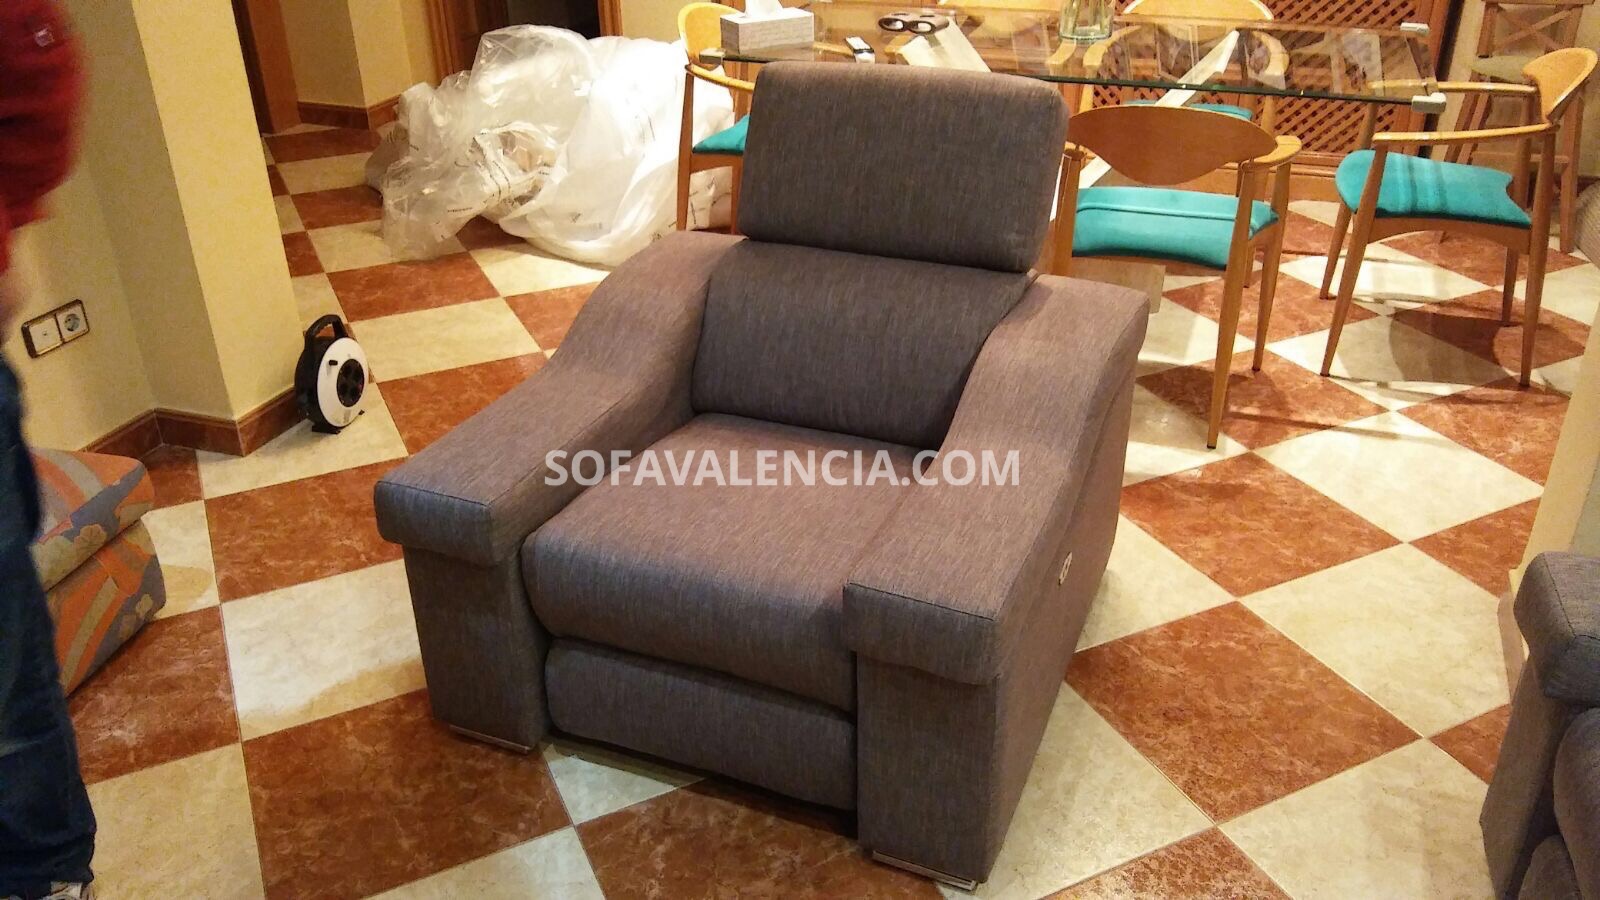 sofa-valencia-fotos-clientes-67